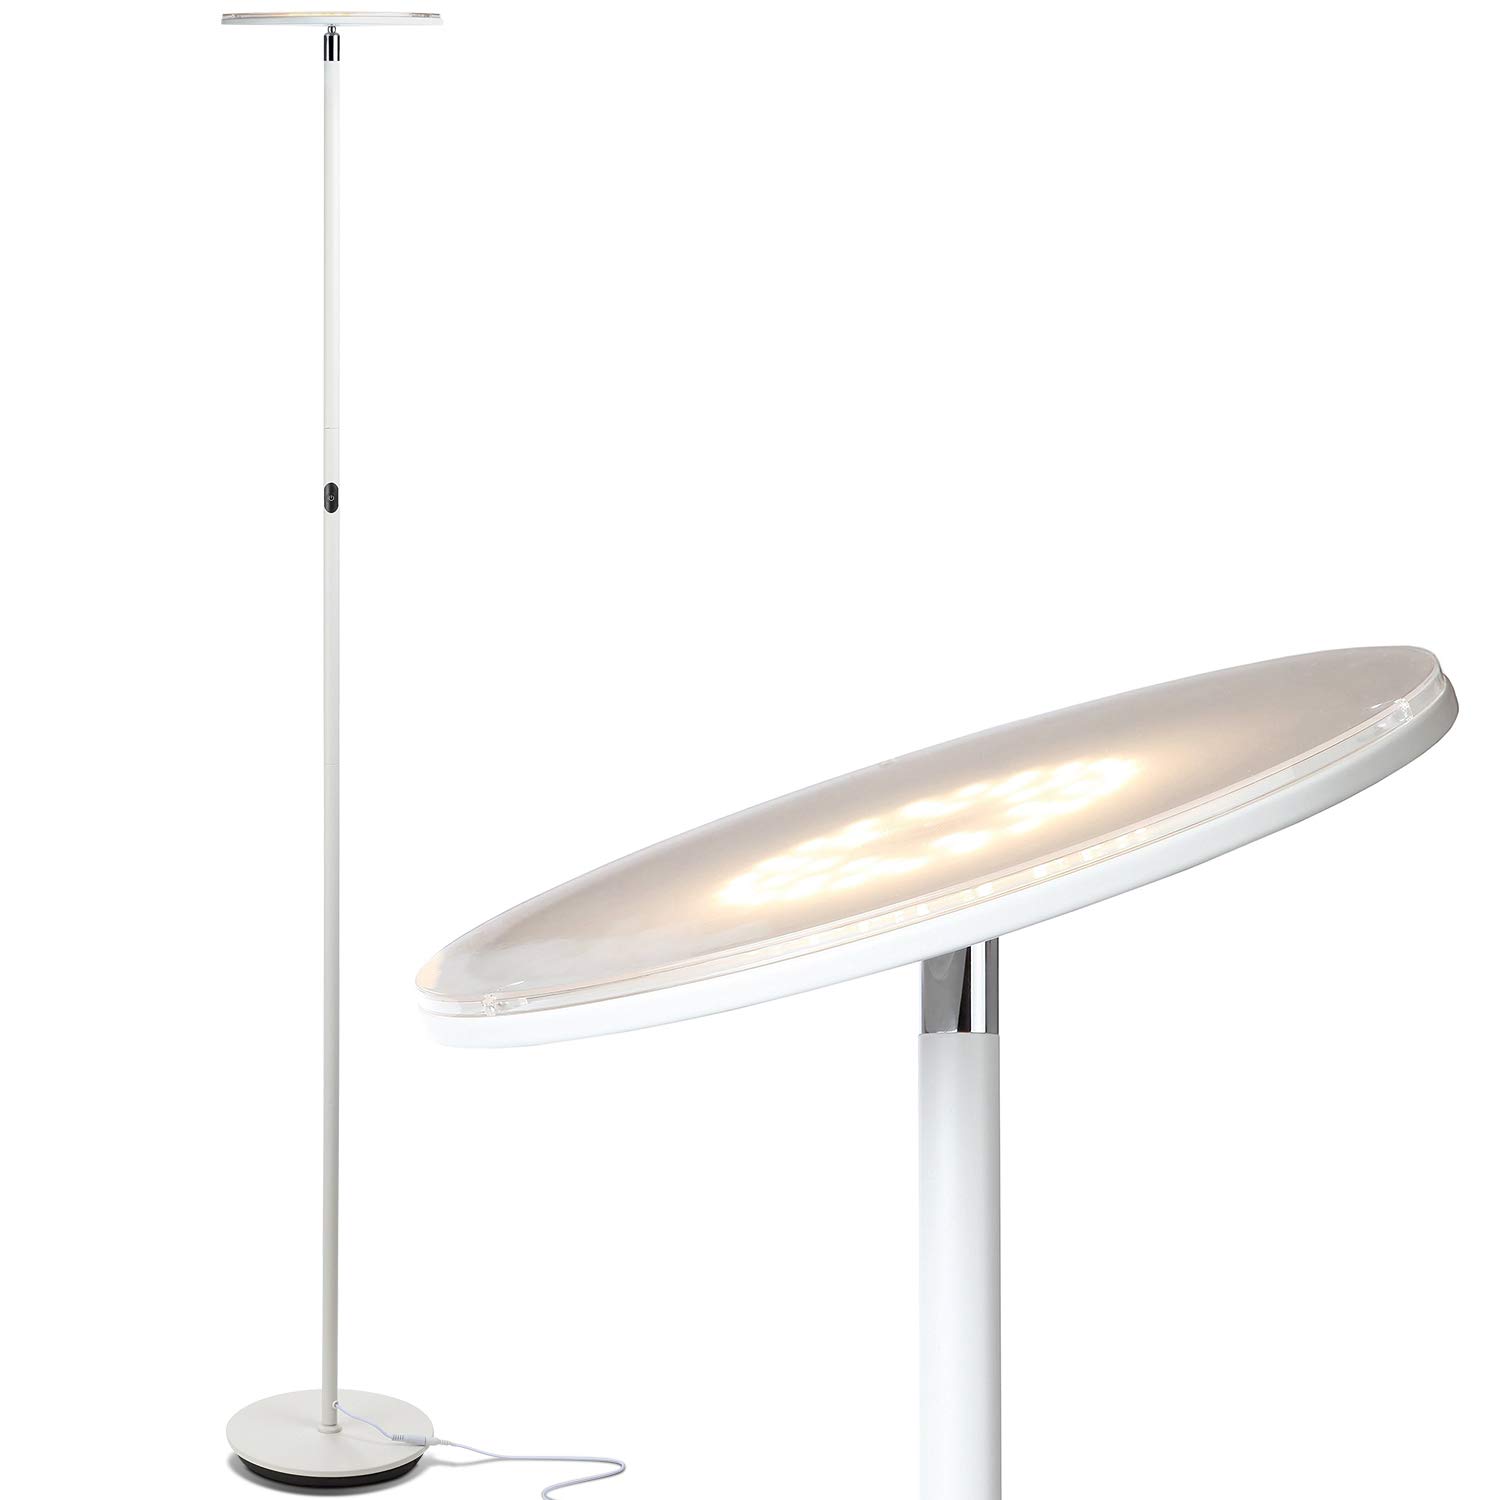 Brightech Sky LED Torchiere Floor Lamp - Energy Saving,...